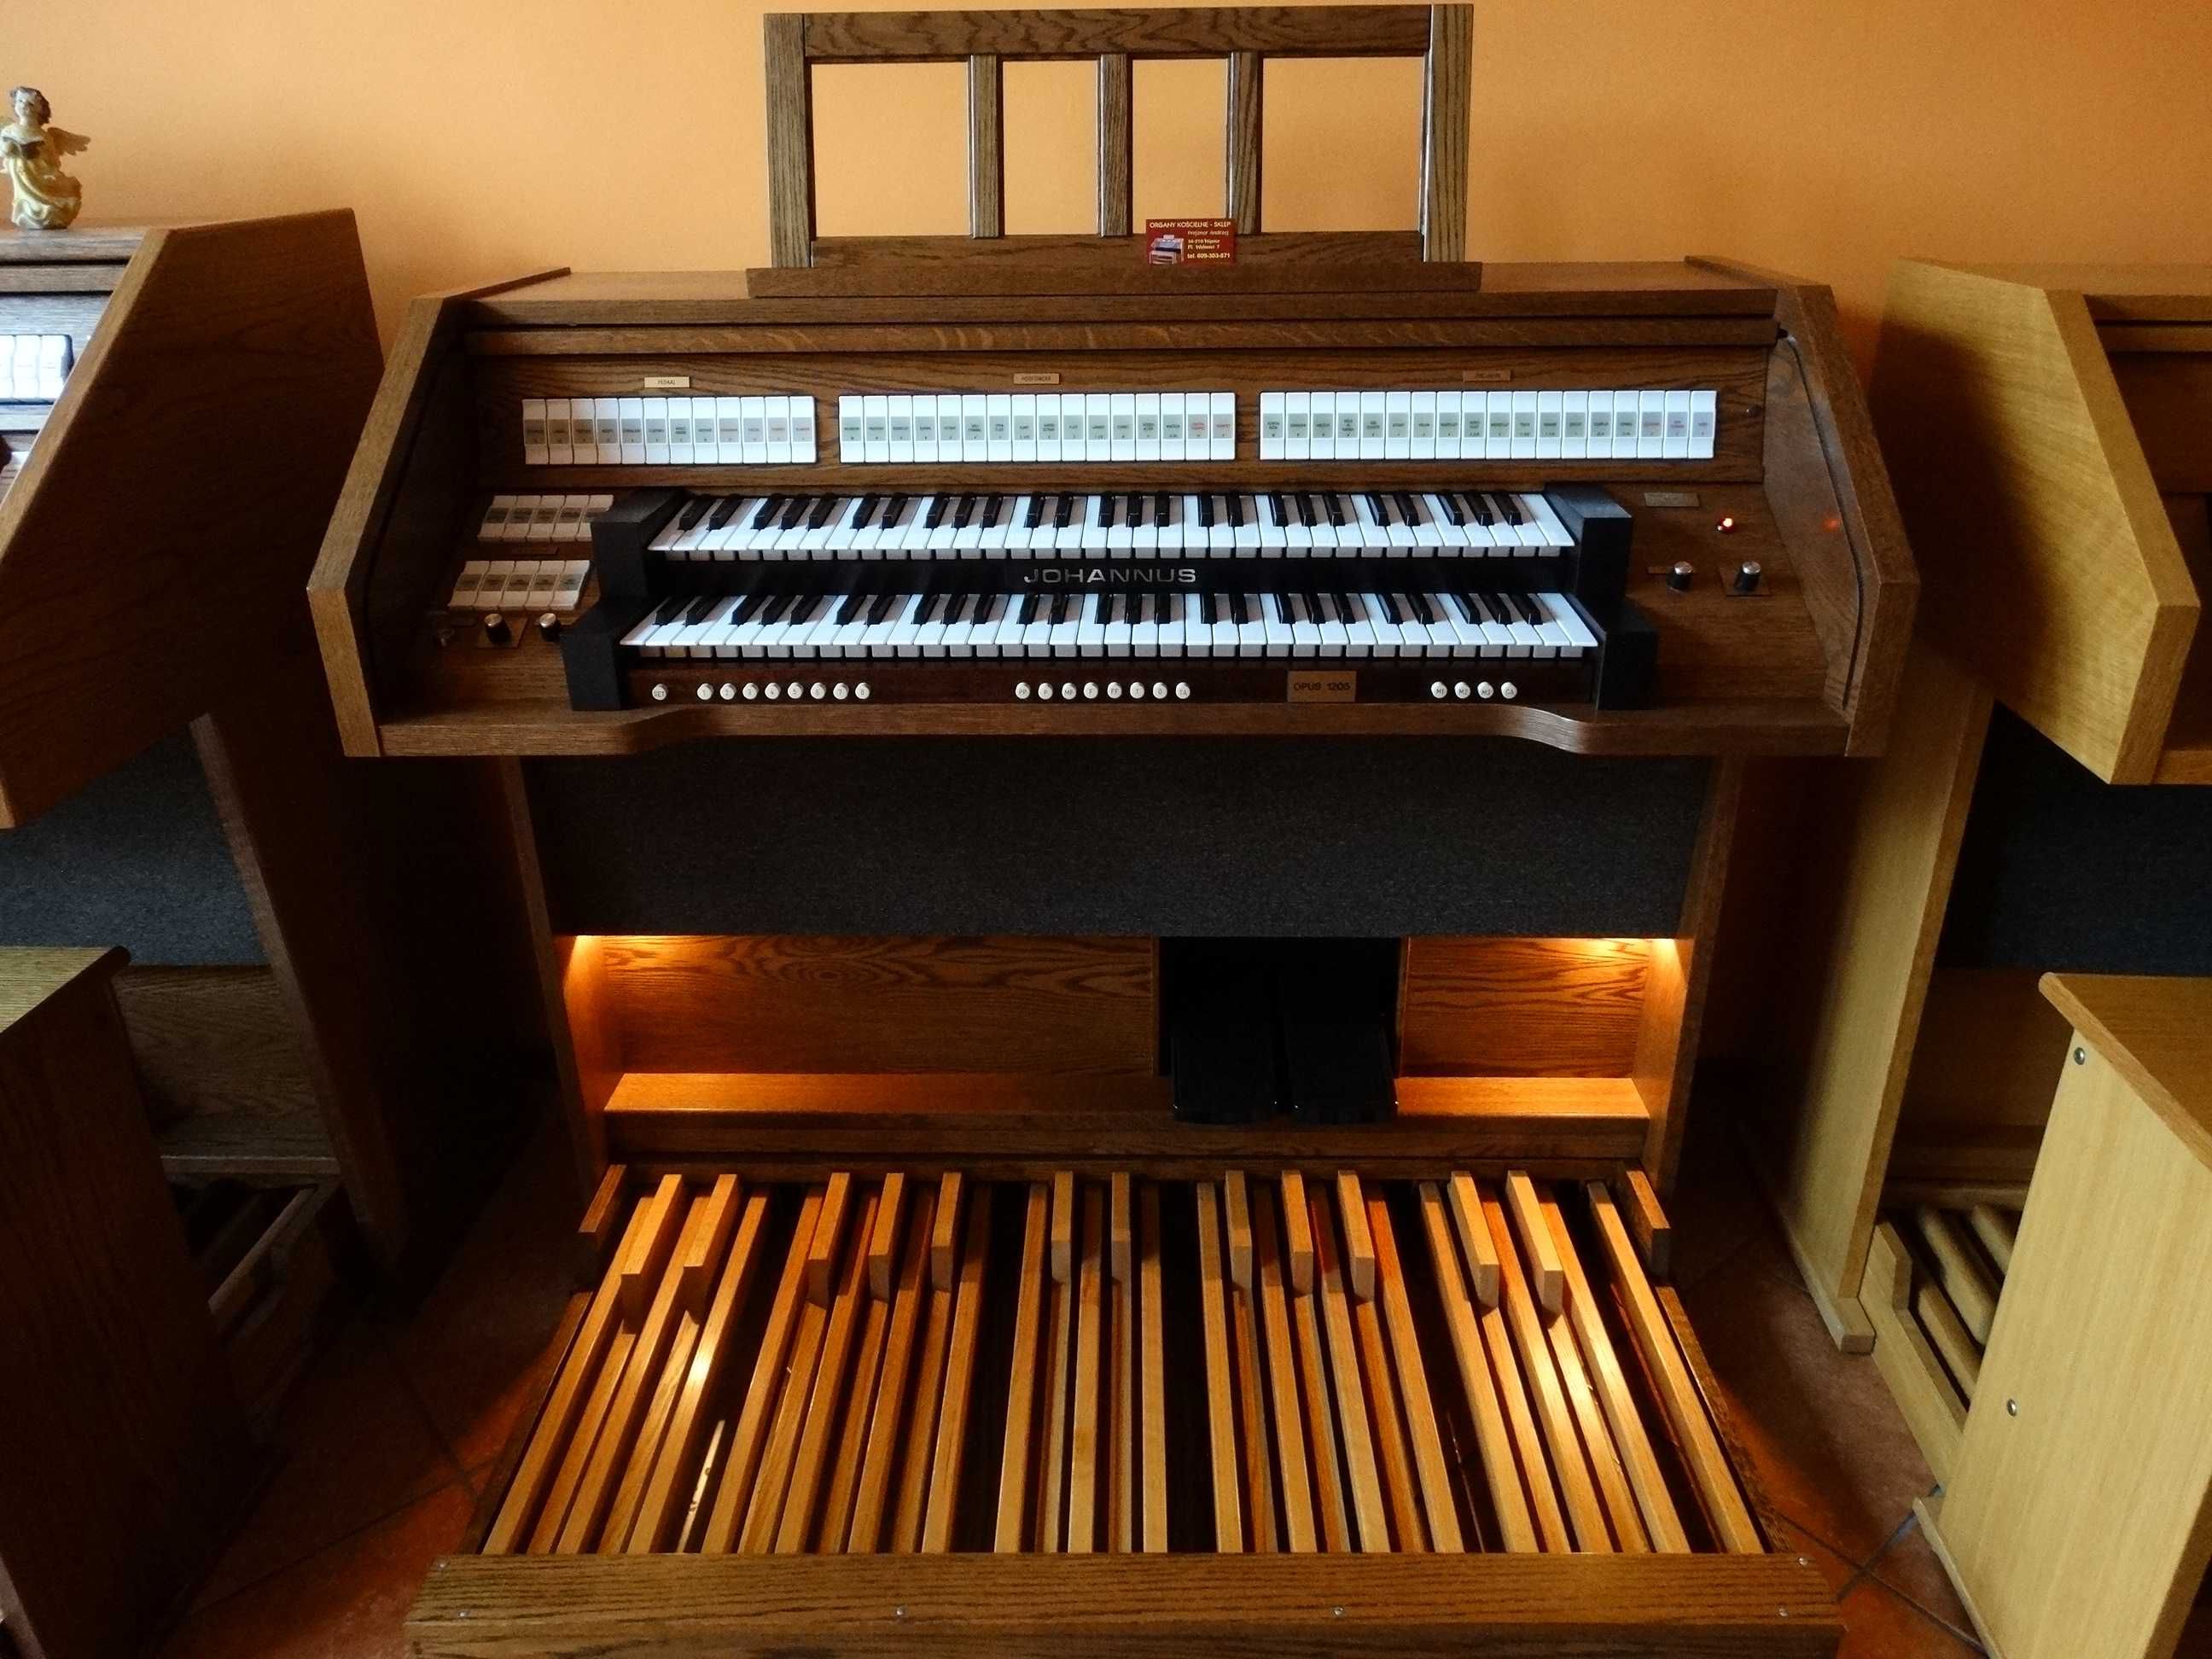 Cyfrowe organy kościelne Johannus Opus 1205 deluxe